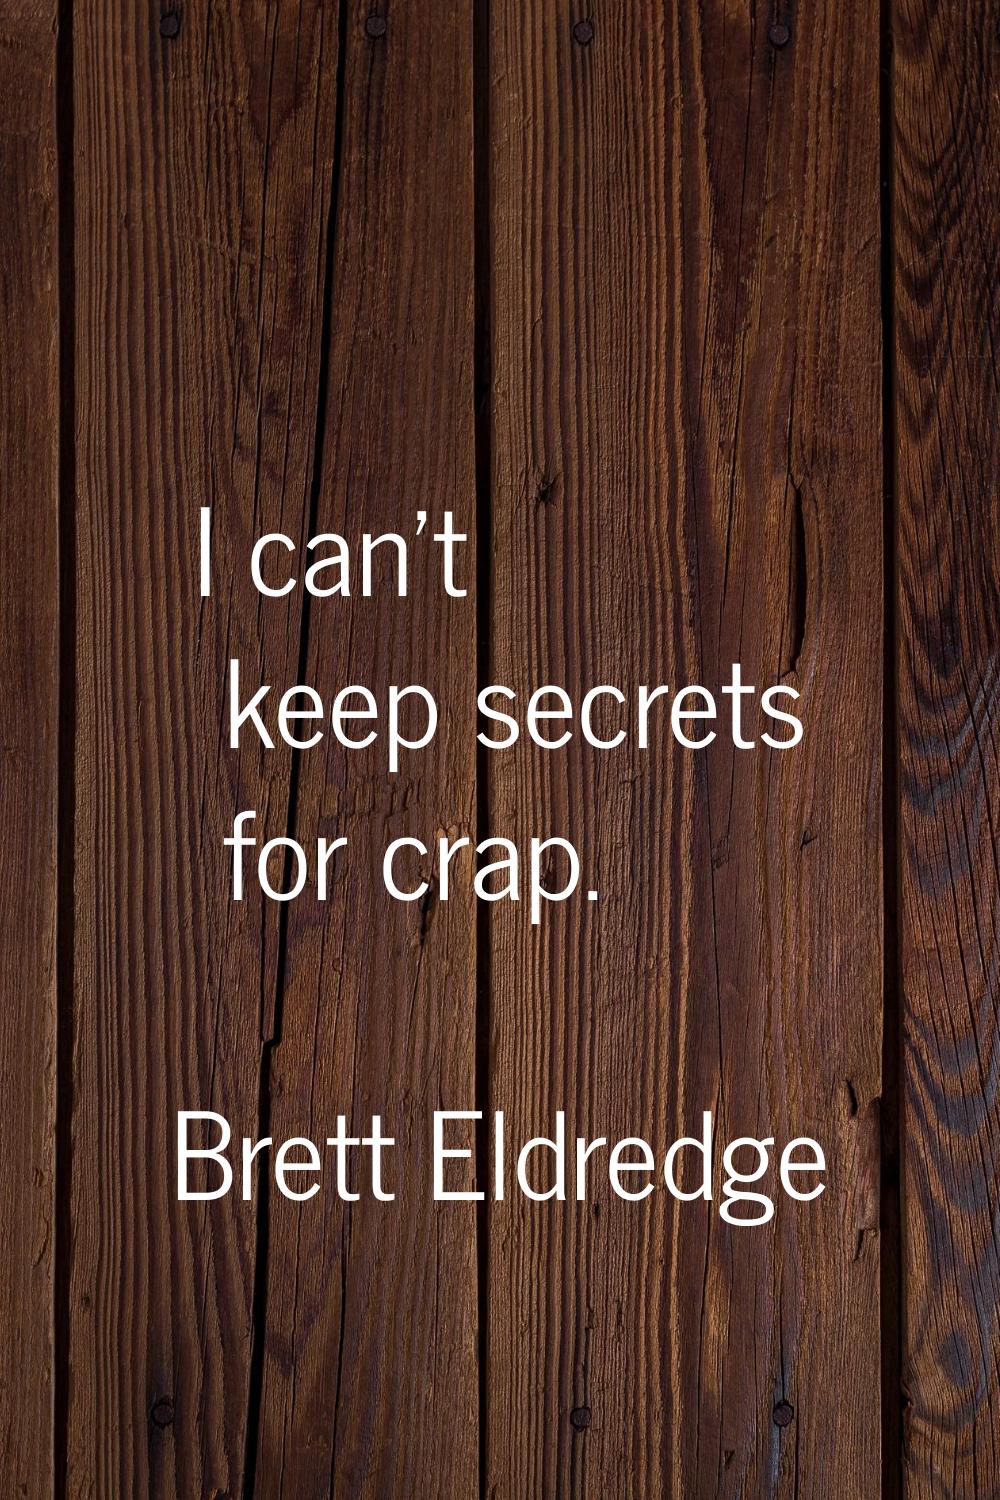 I can't keep secrets for crap.